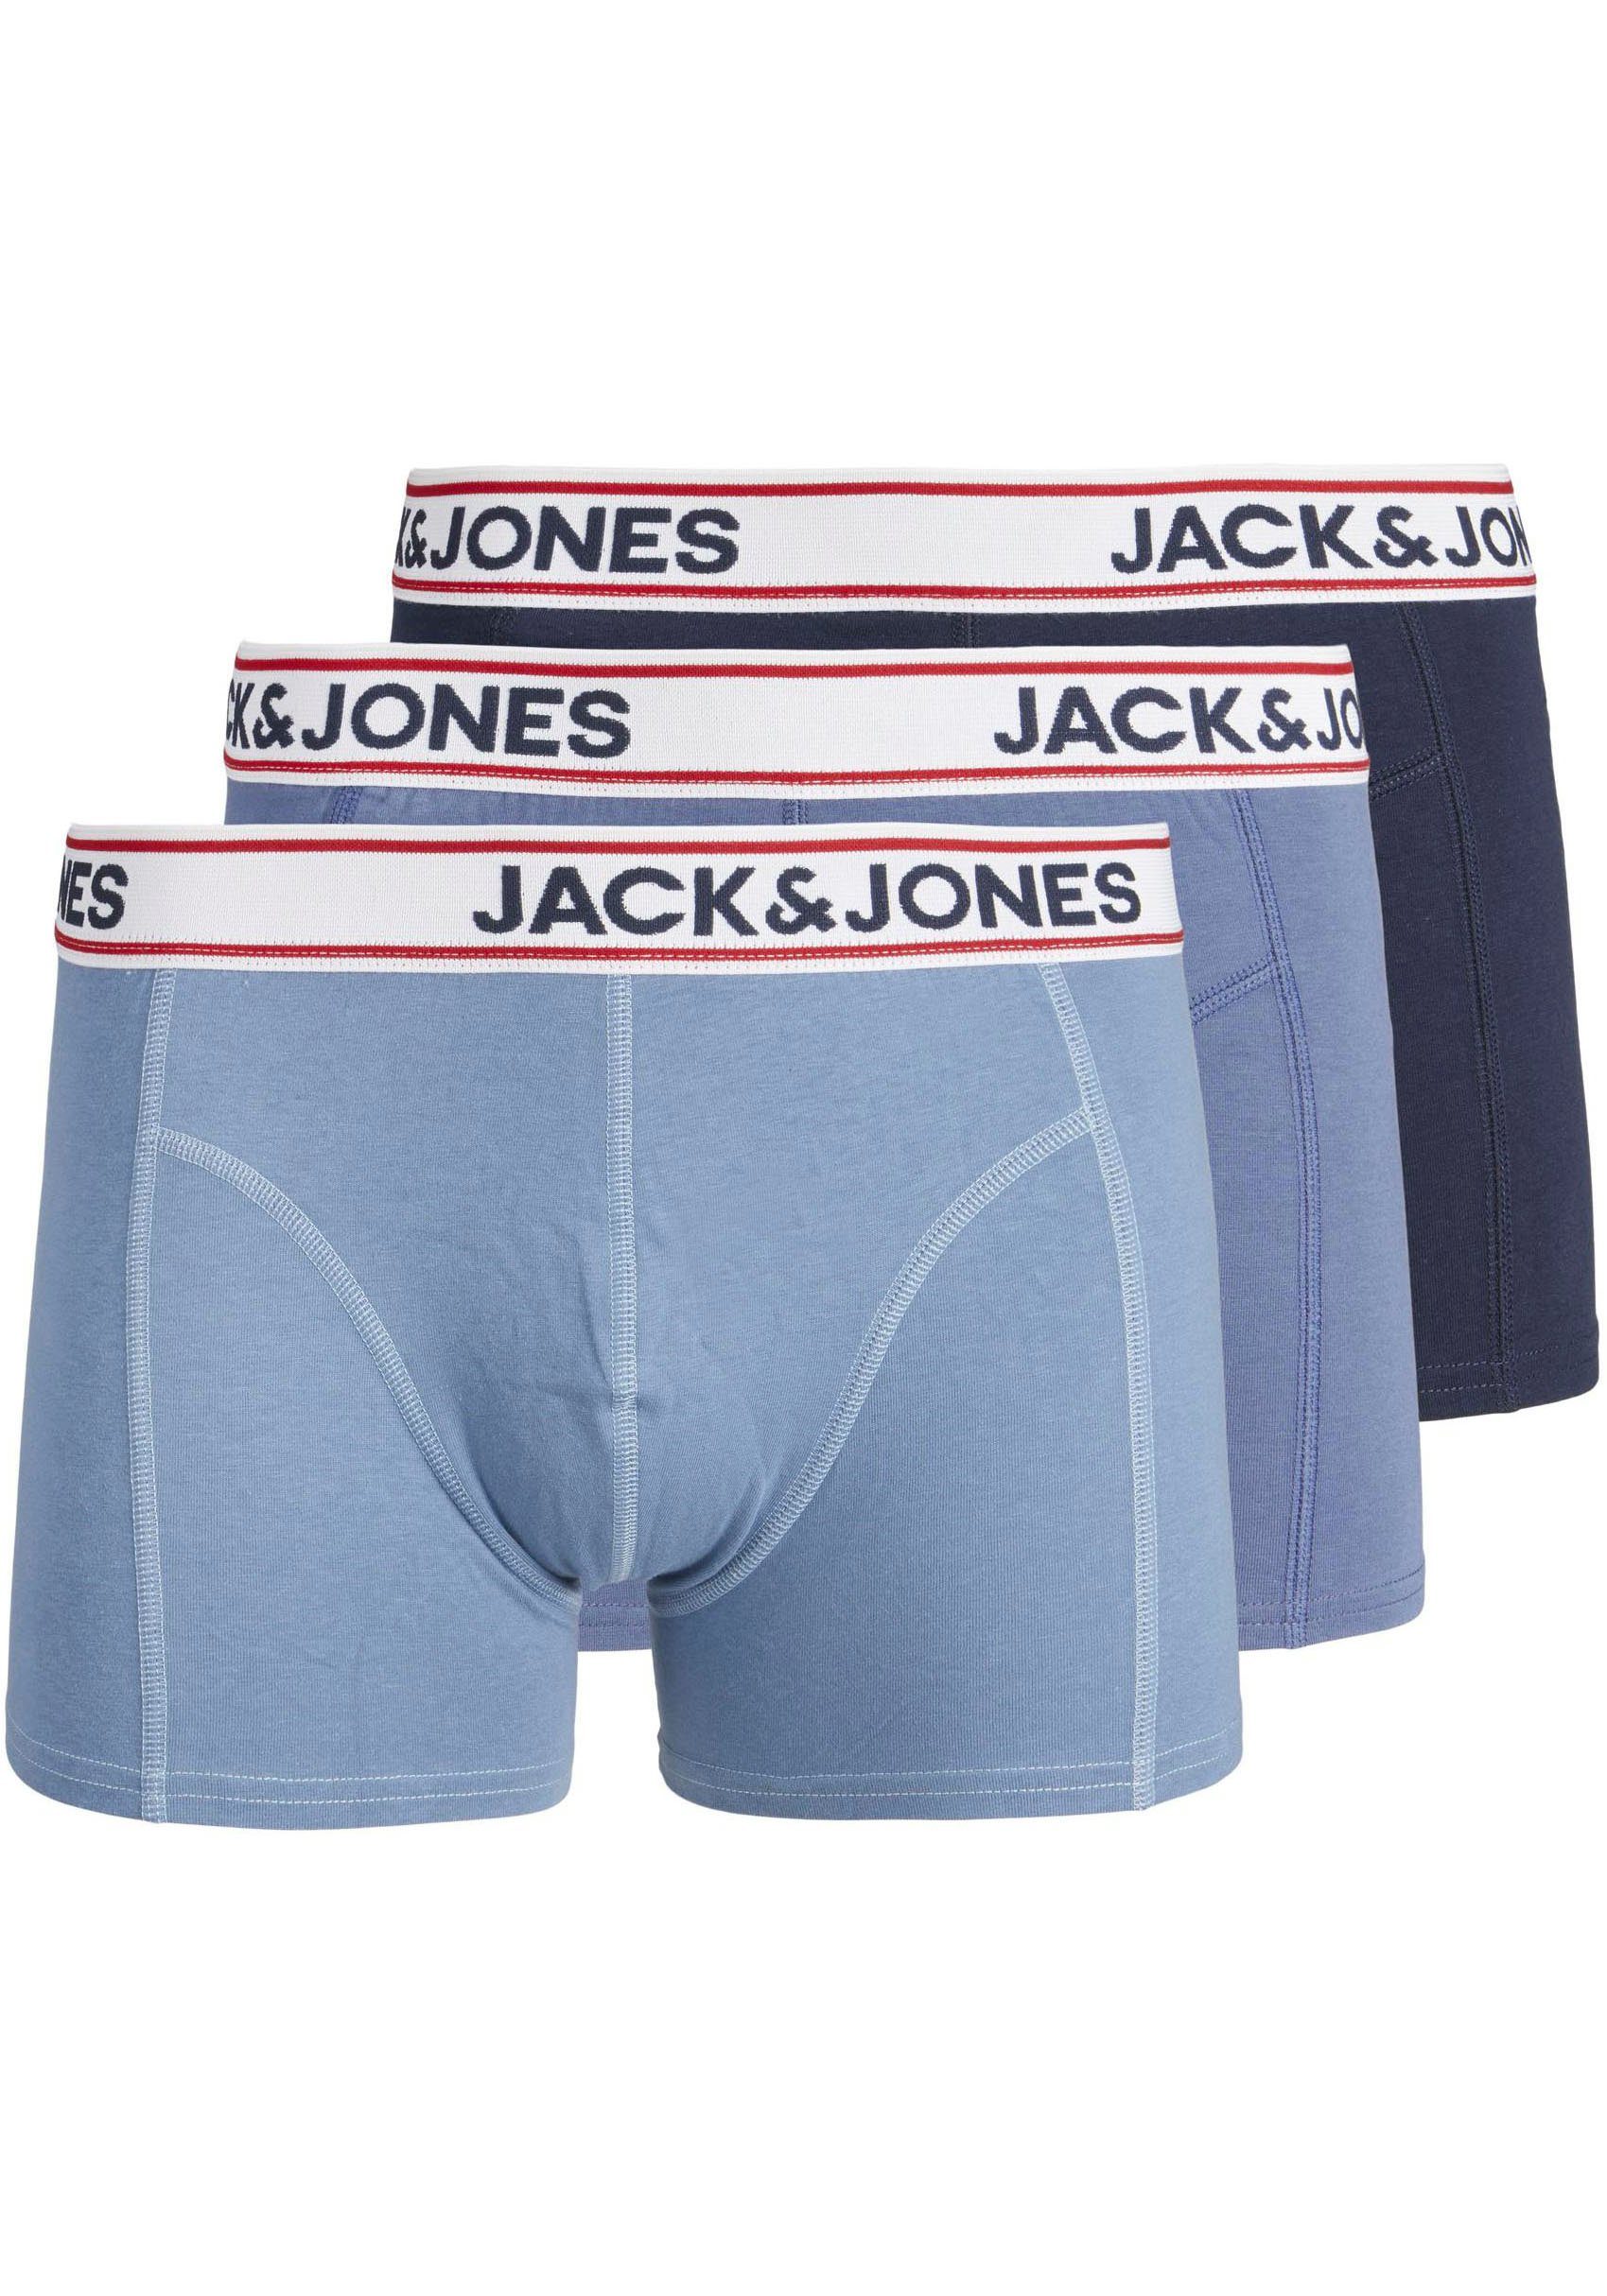 Jack & Jones Trunk coronet / TRUNKS NOOS 3-St) PACK 3 JACJAKE navy blazer (Packung